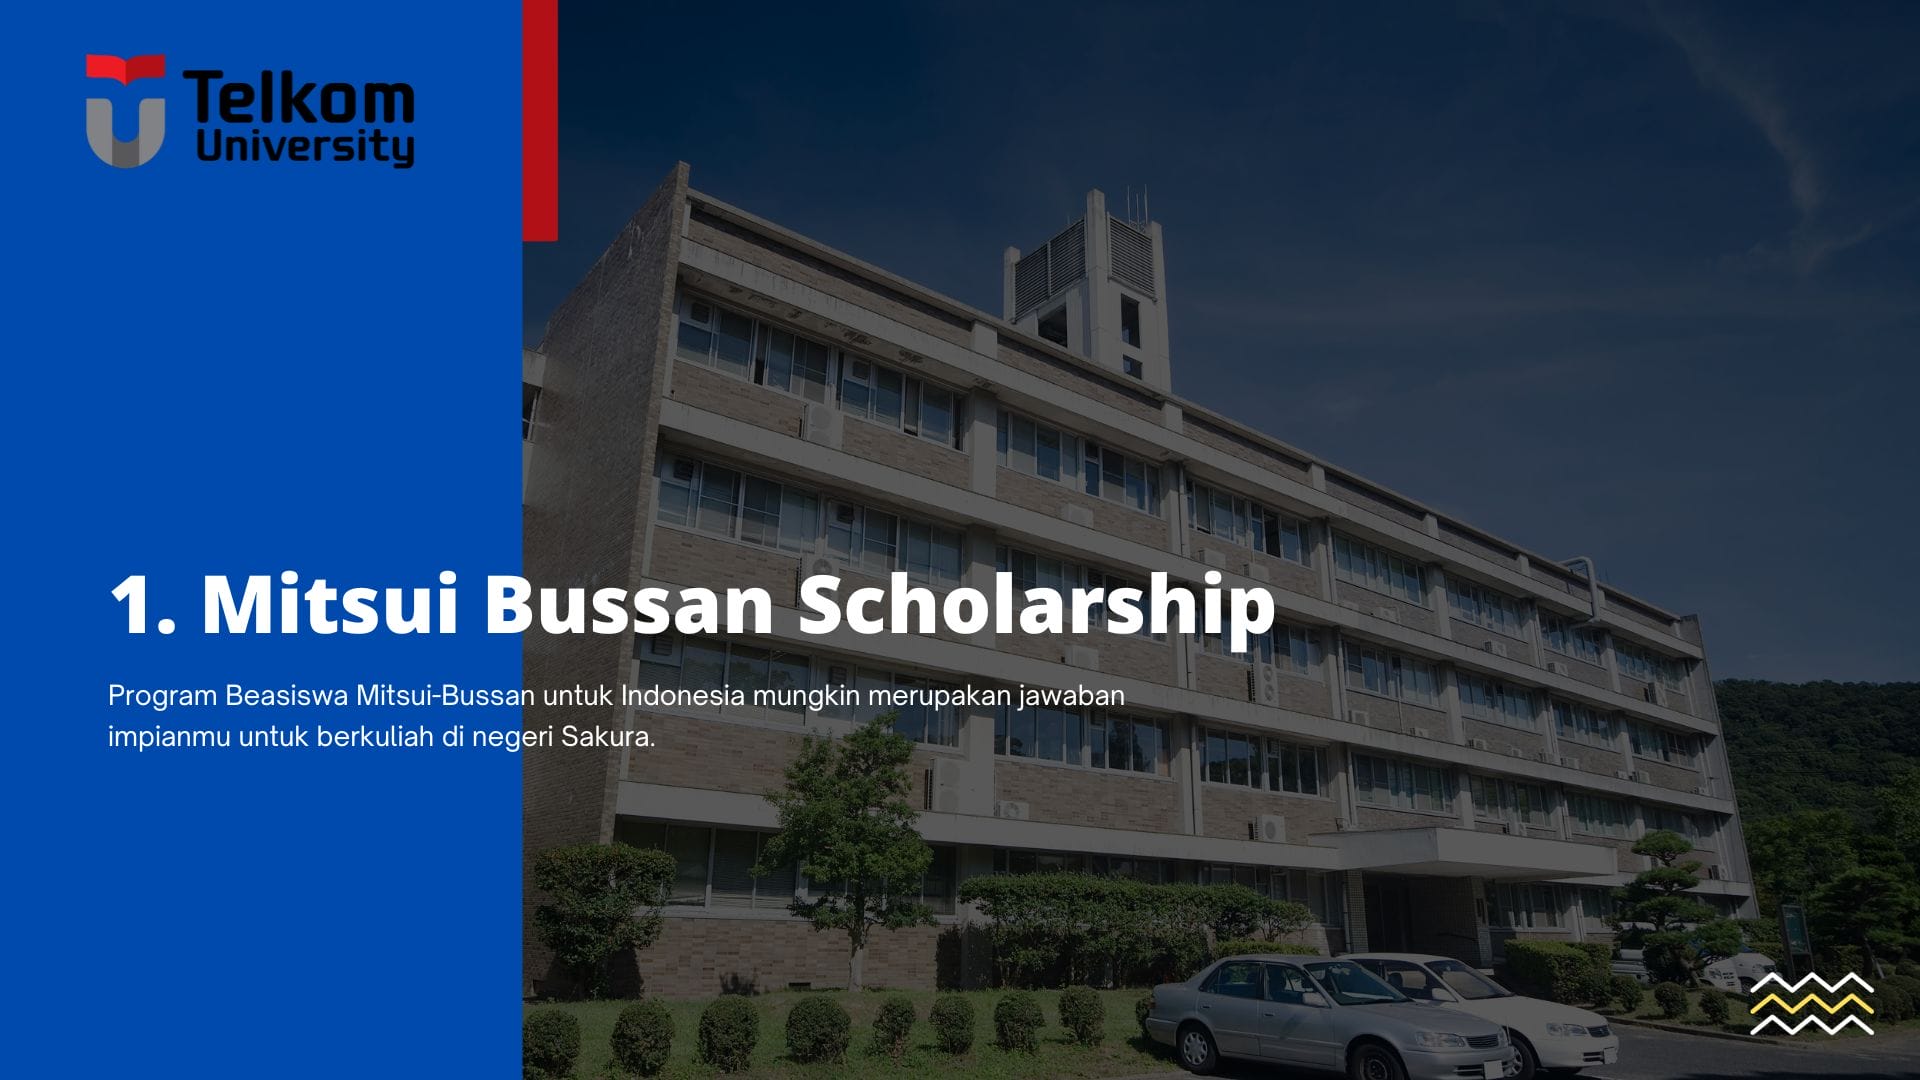 MItsui Bussan Scholarship